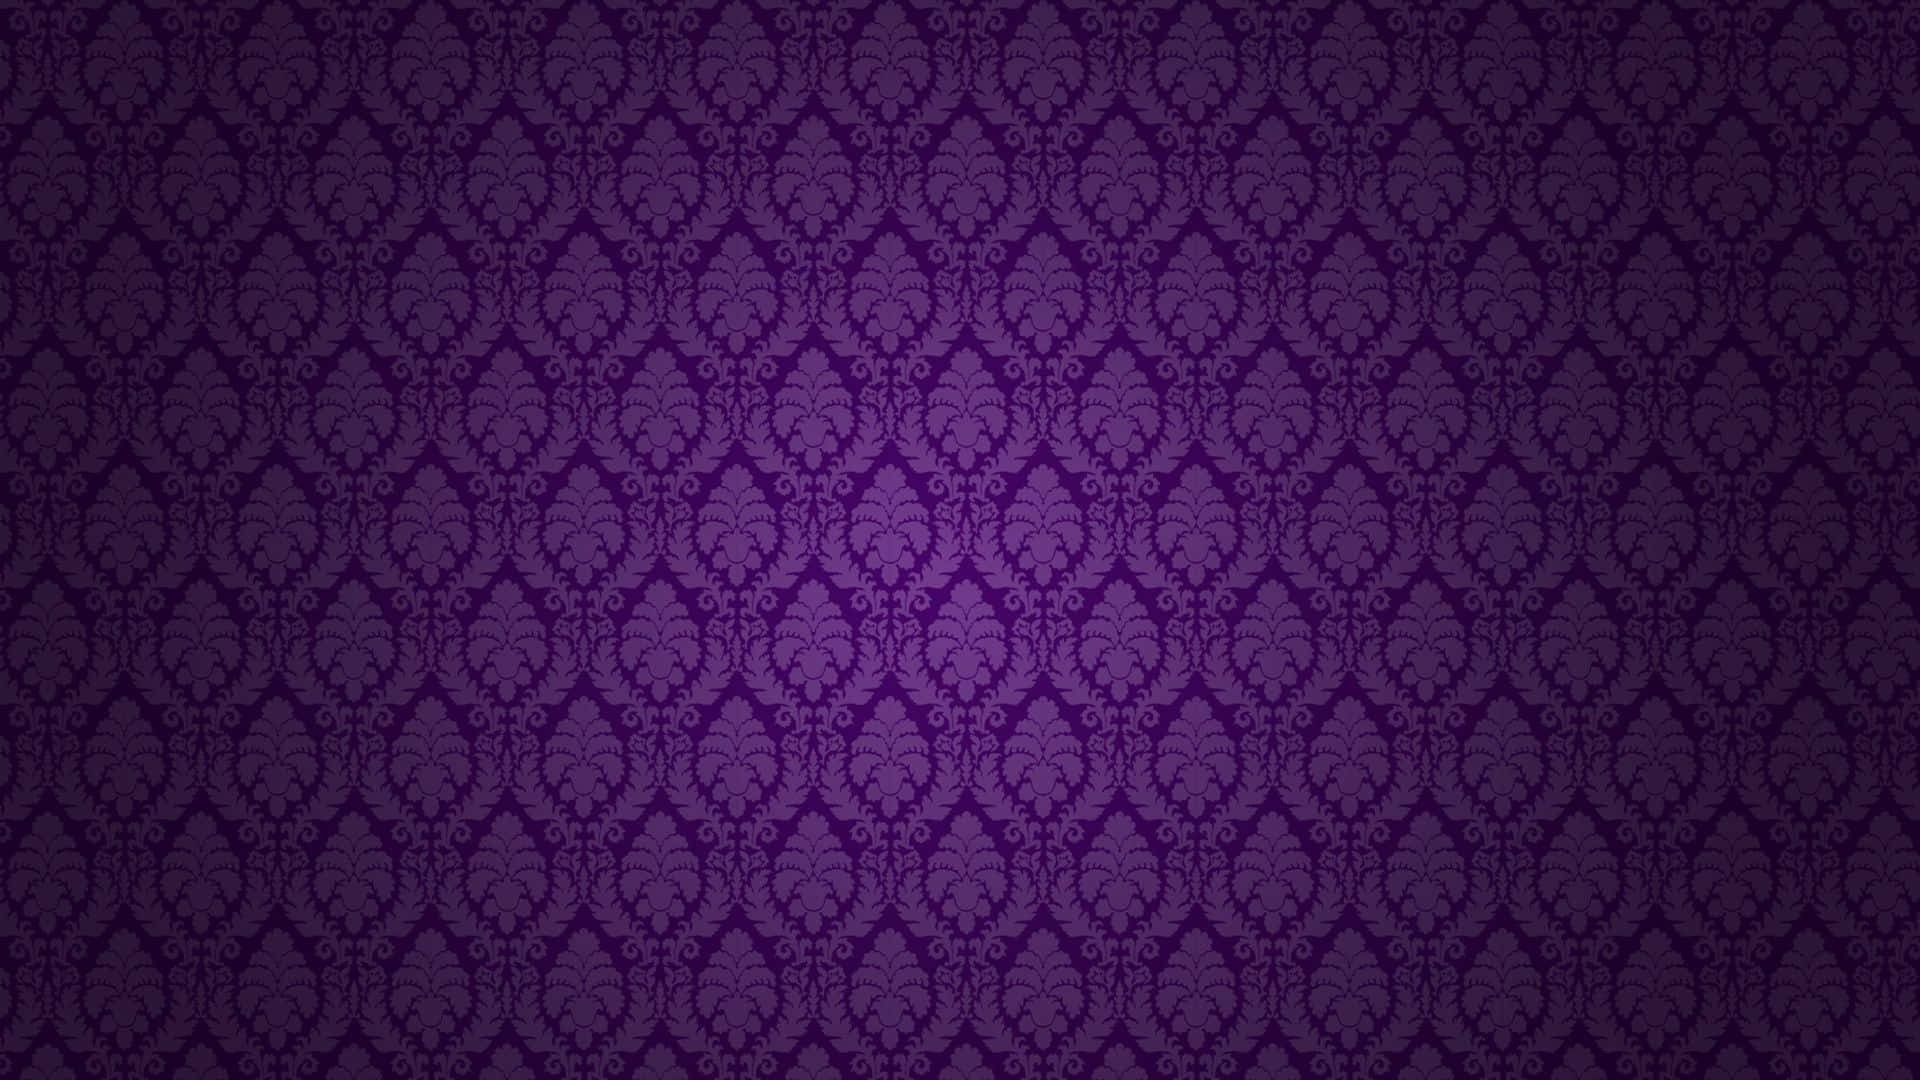 Enjoy an inspired workspace with this playful purple desktop Wallpaper